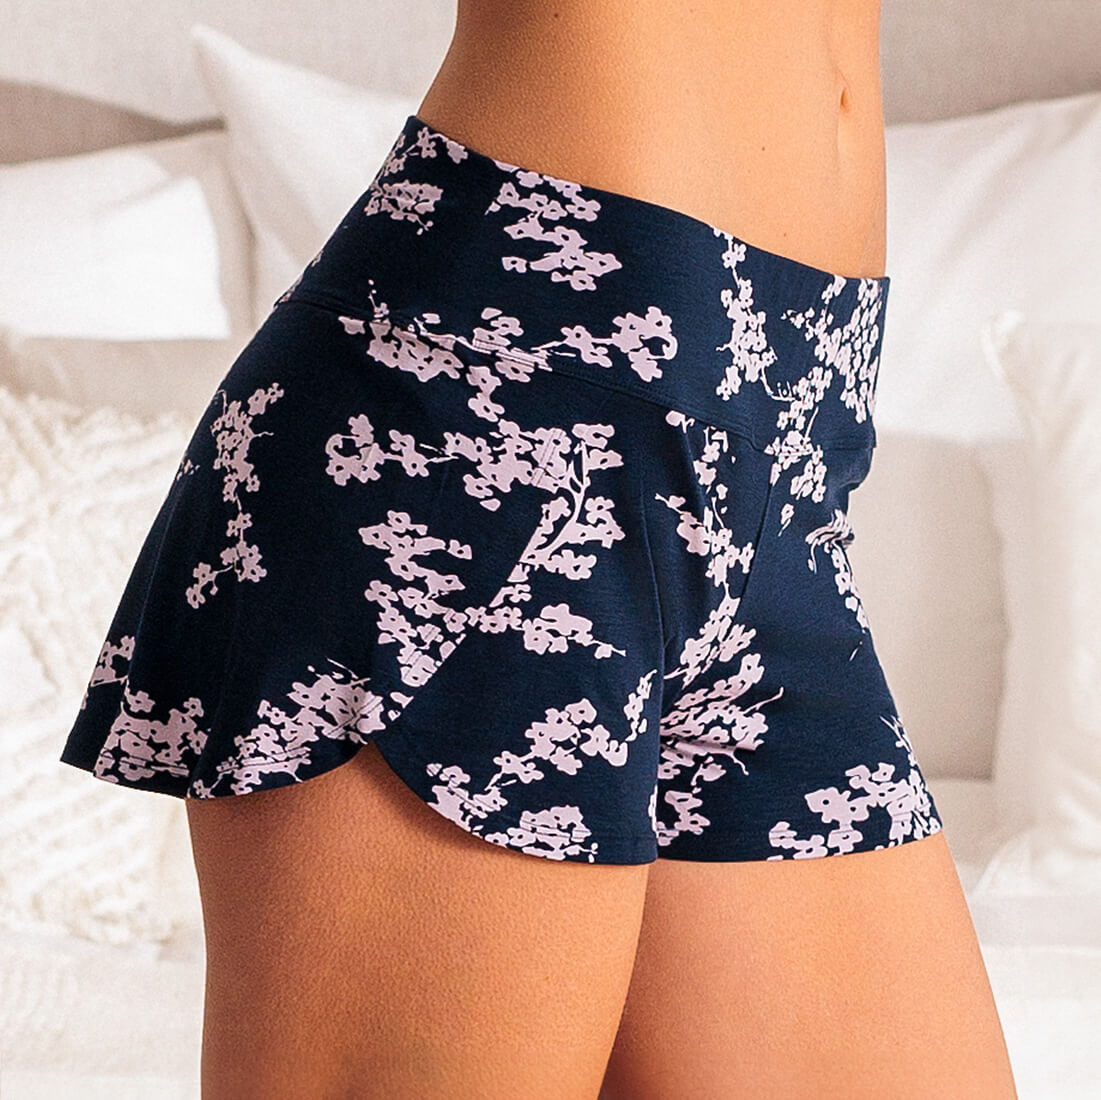 Women's cooling pajamas shorts  || Cherry blossom